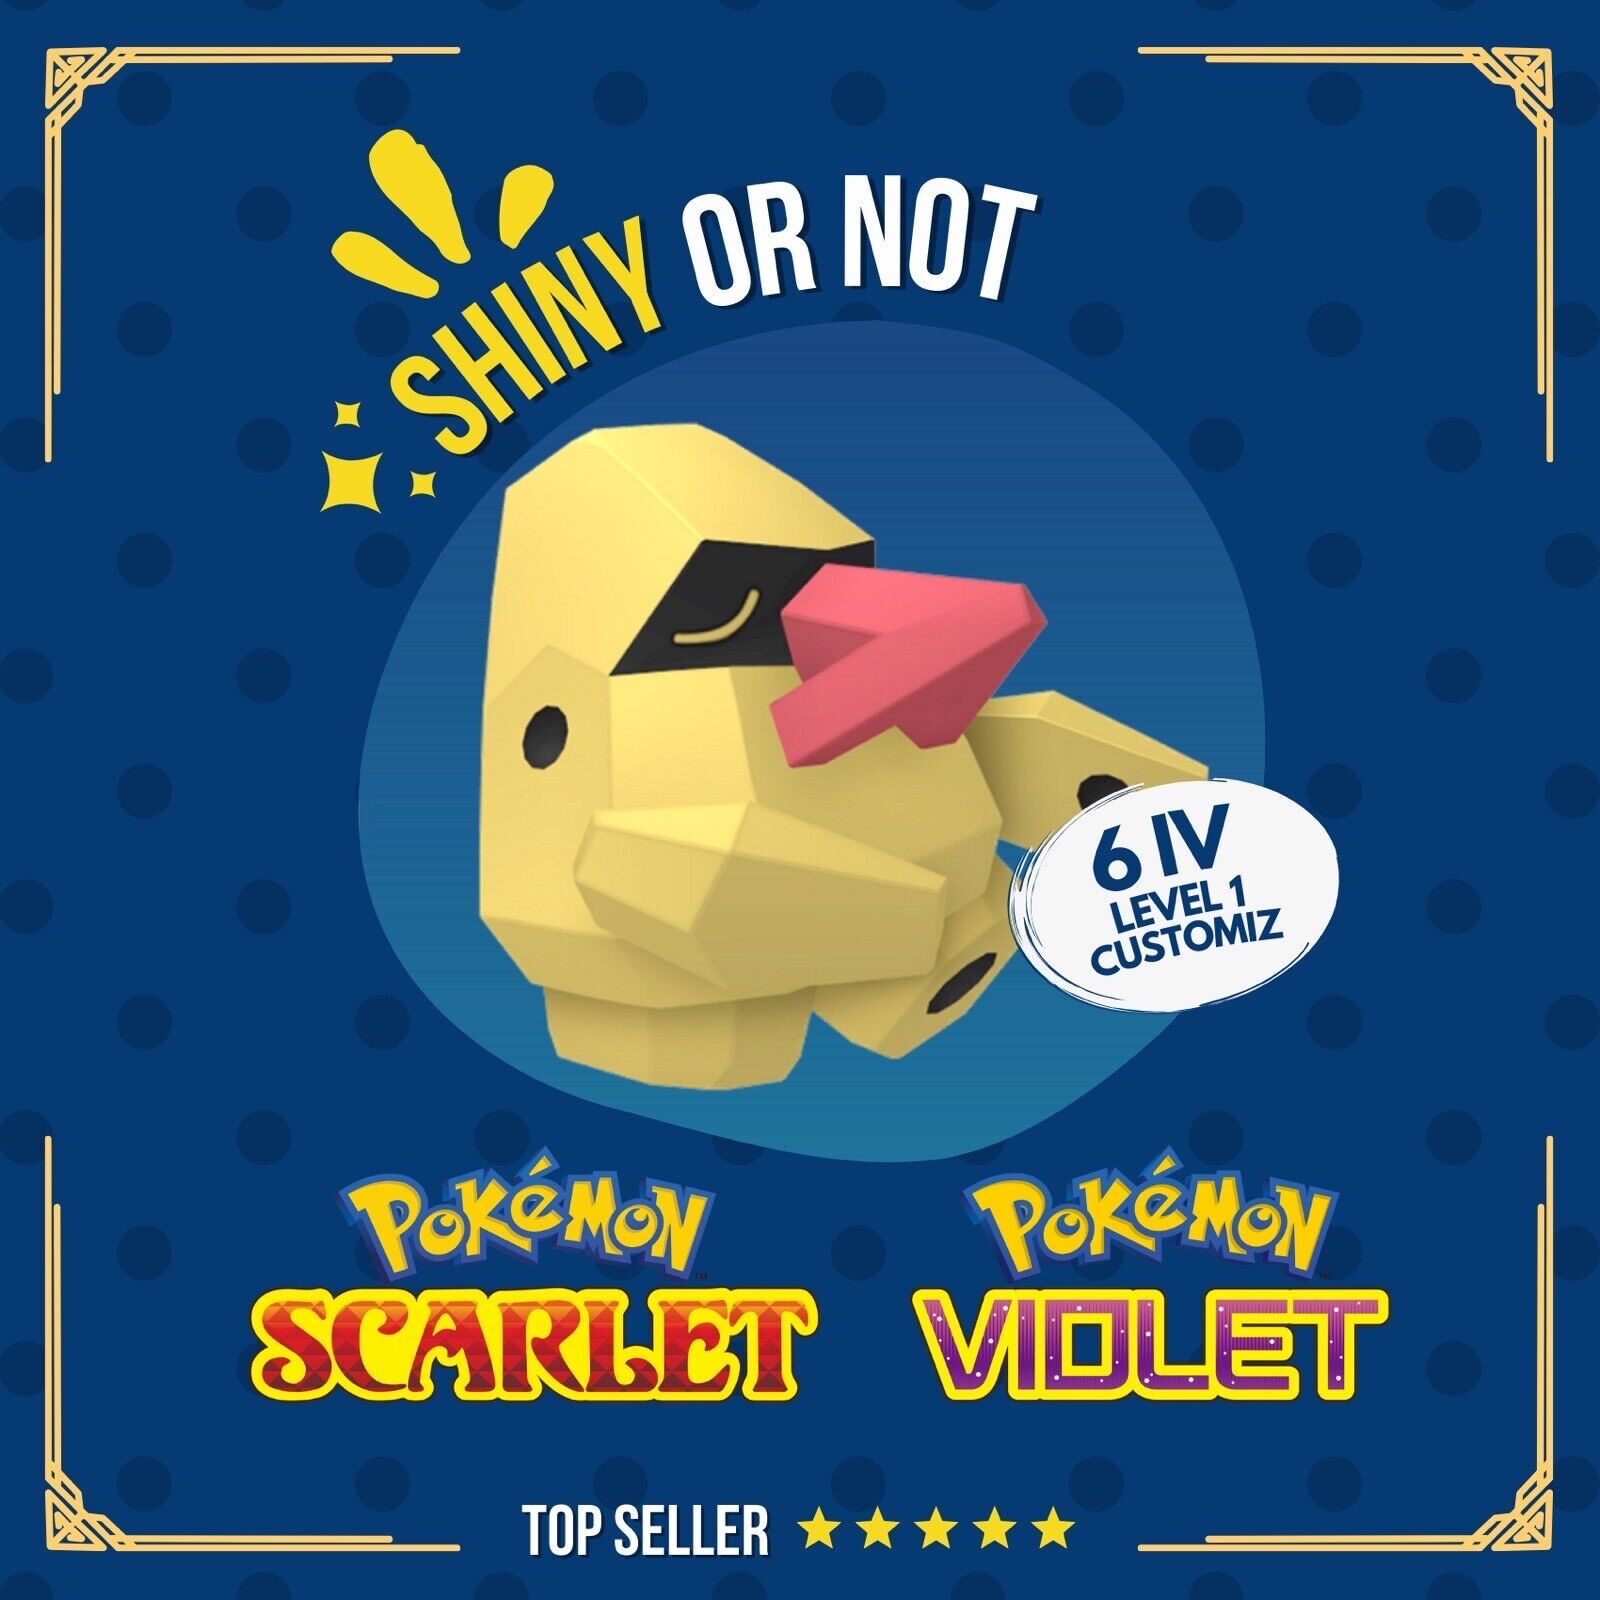 Nosepass Shiny or Non ✨ 6 IV Customizable Nature Level OT Pokémon Scarlet Violet by Shiny Living Dex | Shiny Living Dex